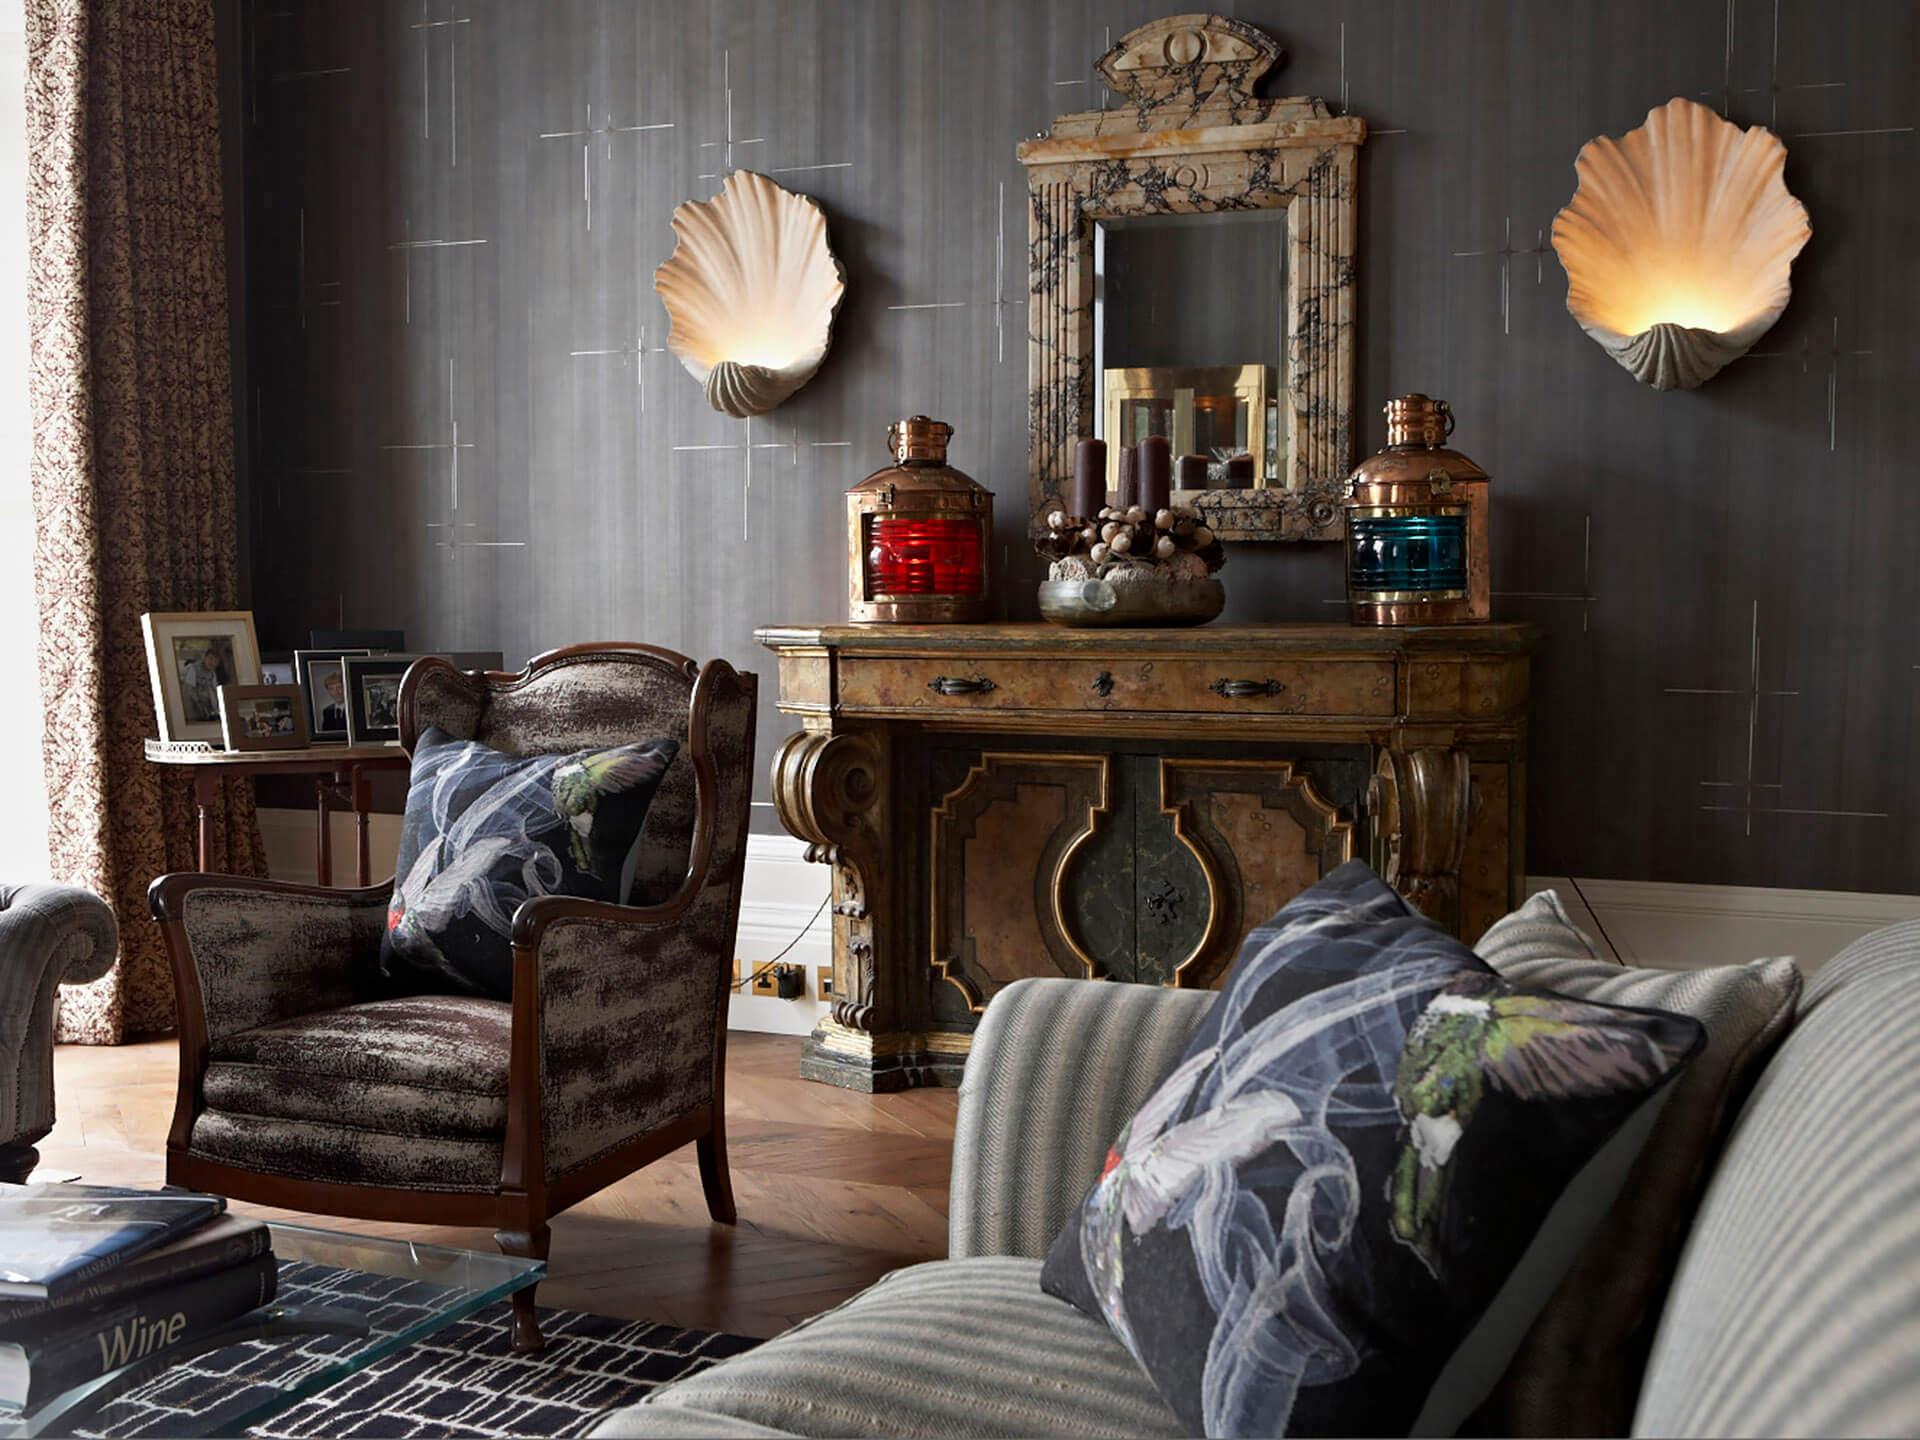 Ladbroke-Grove- W11-Living-room- mantelpiece-interior-design